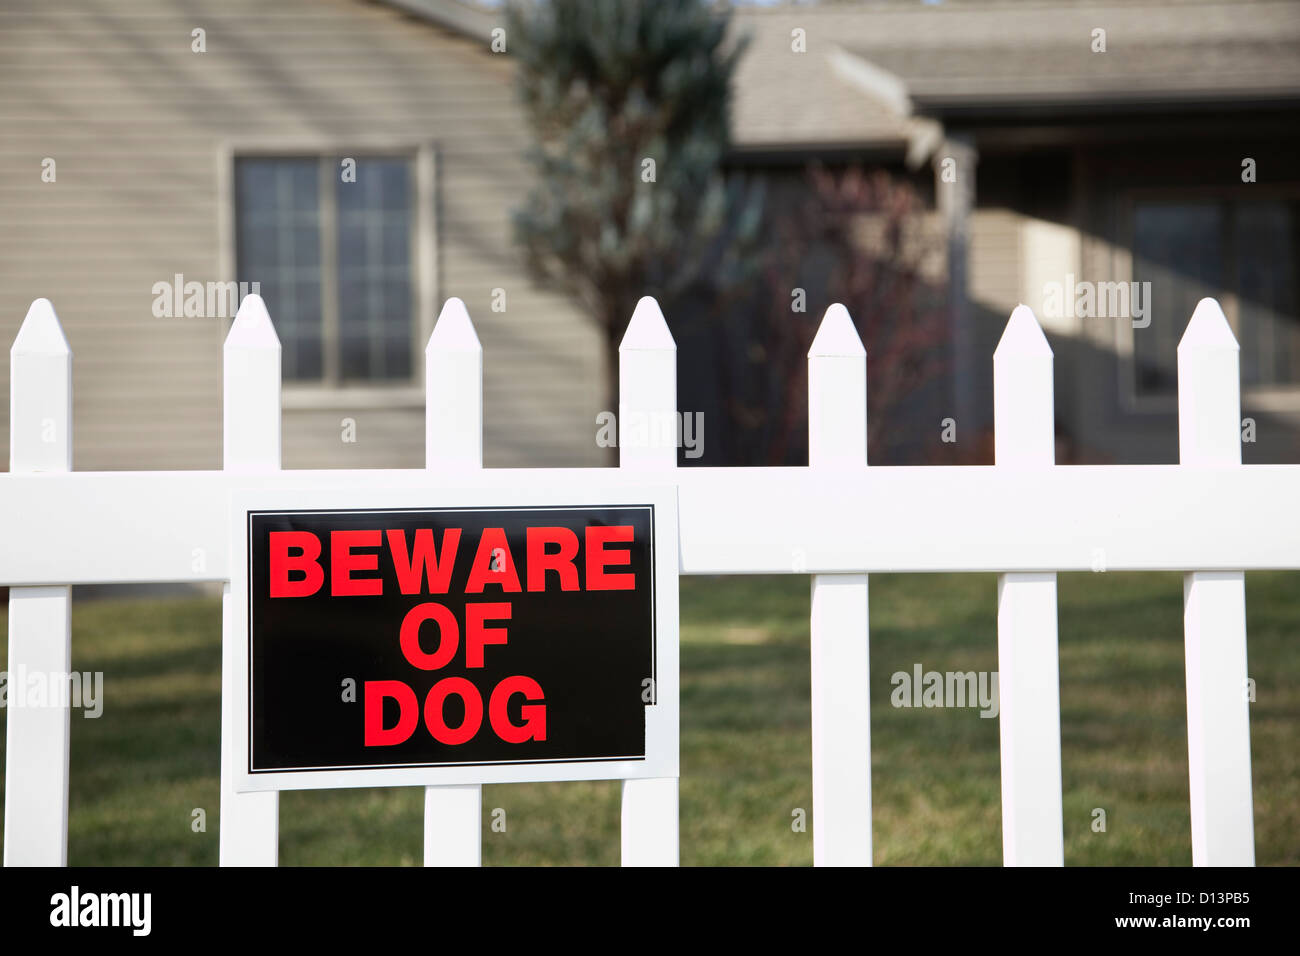 USA, Illinois, Metamora, Beware of dog sign Stock Photo